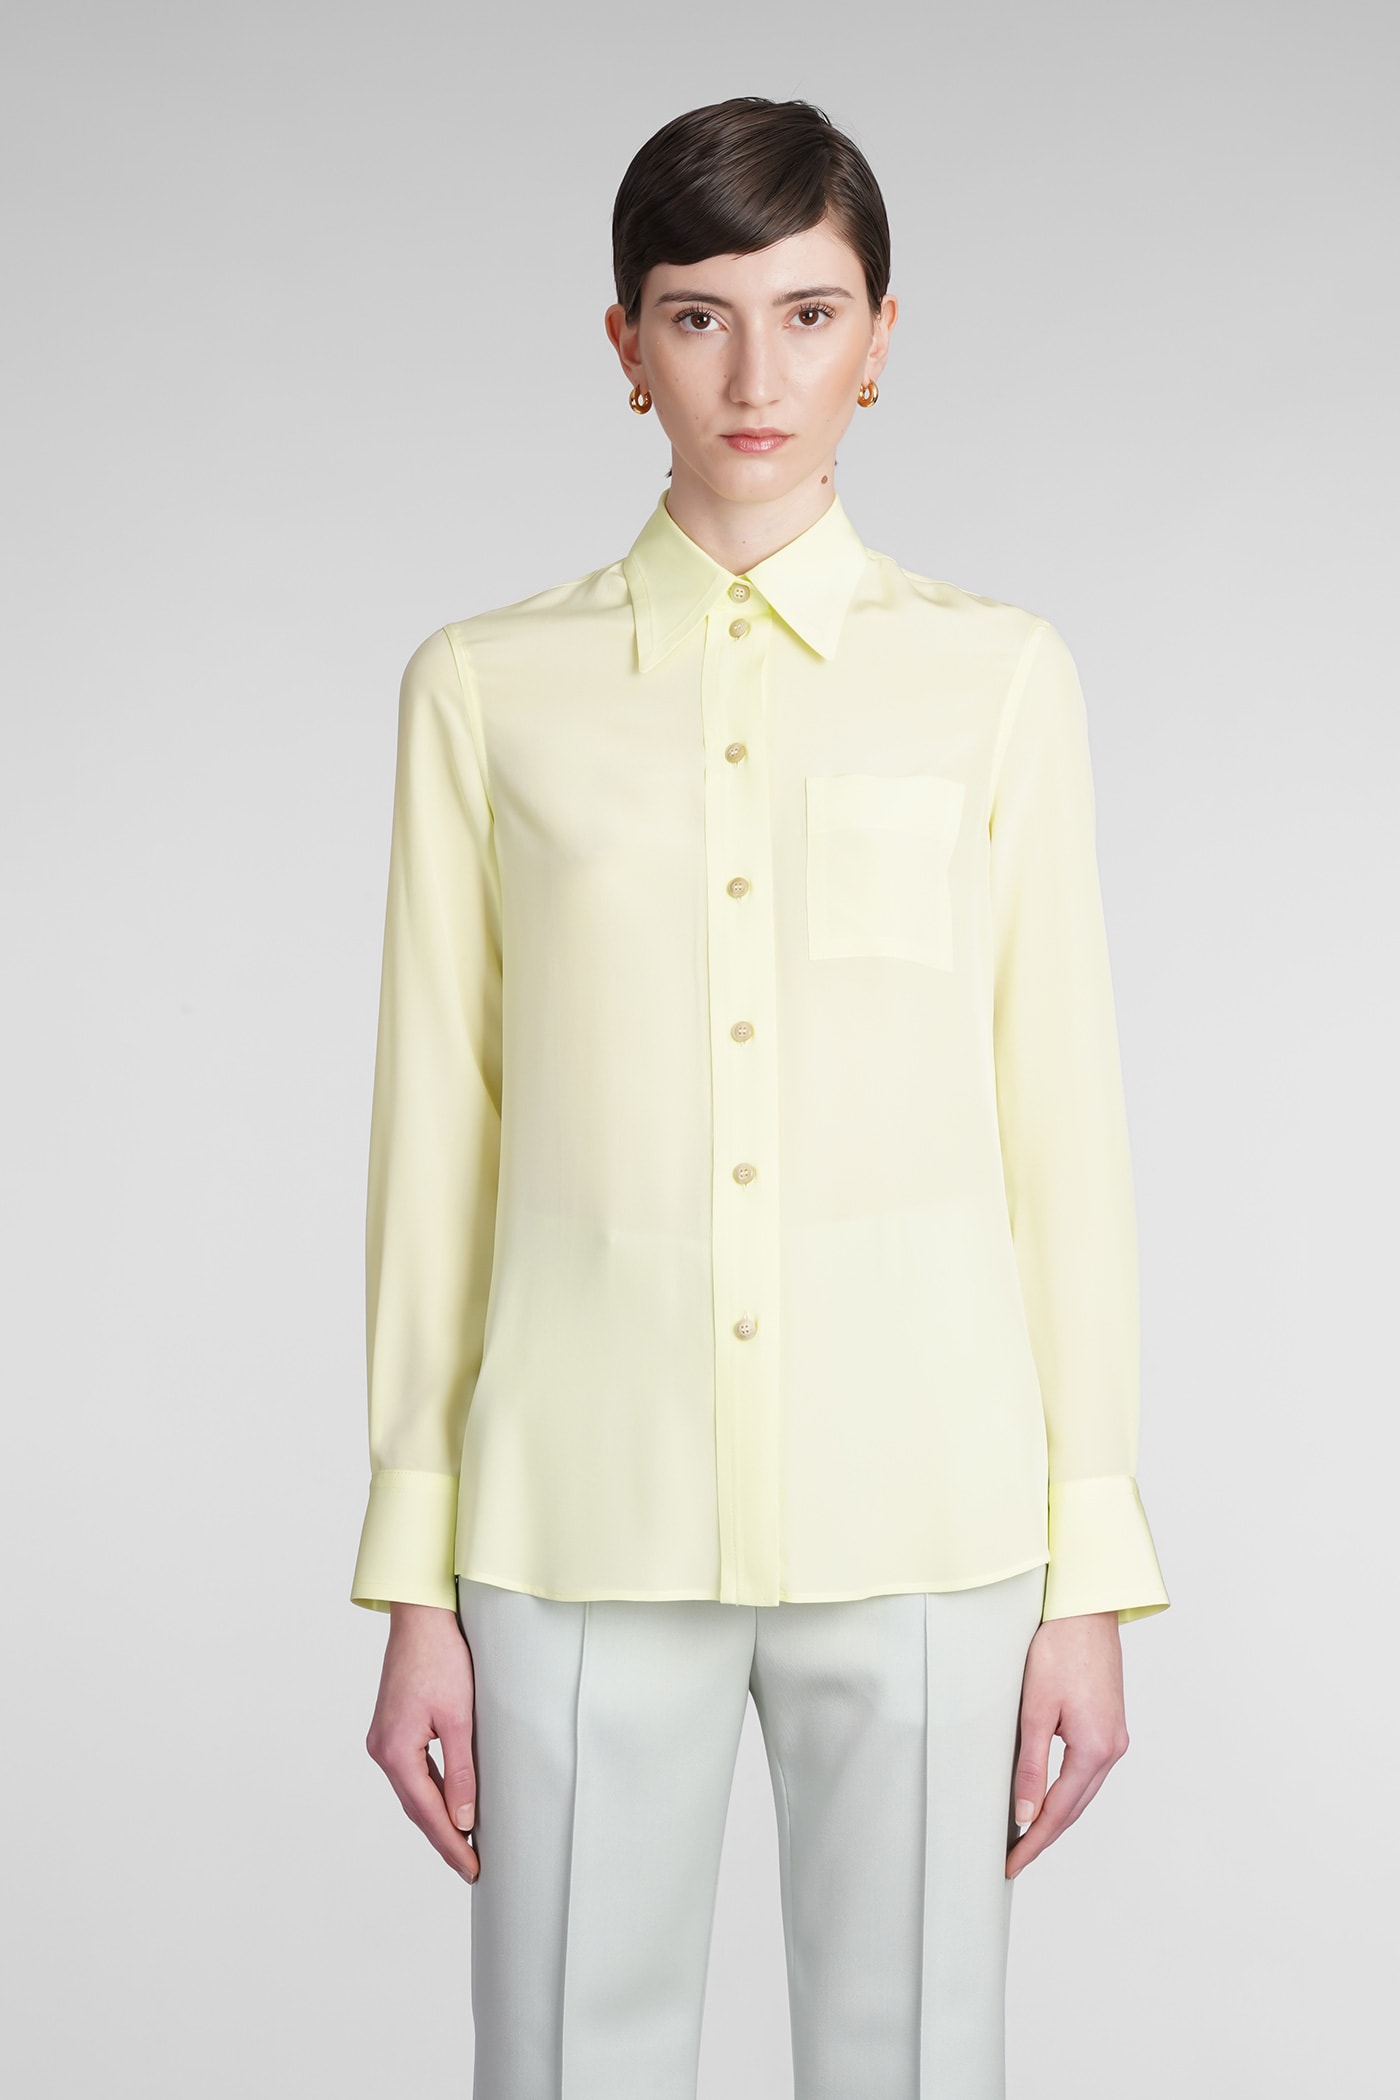 Lanvin Shirt In Yellow Cotton